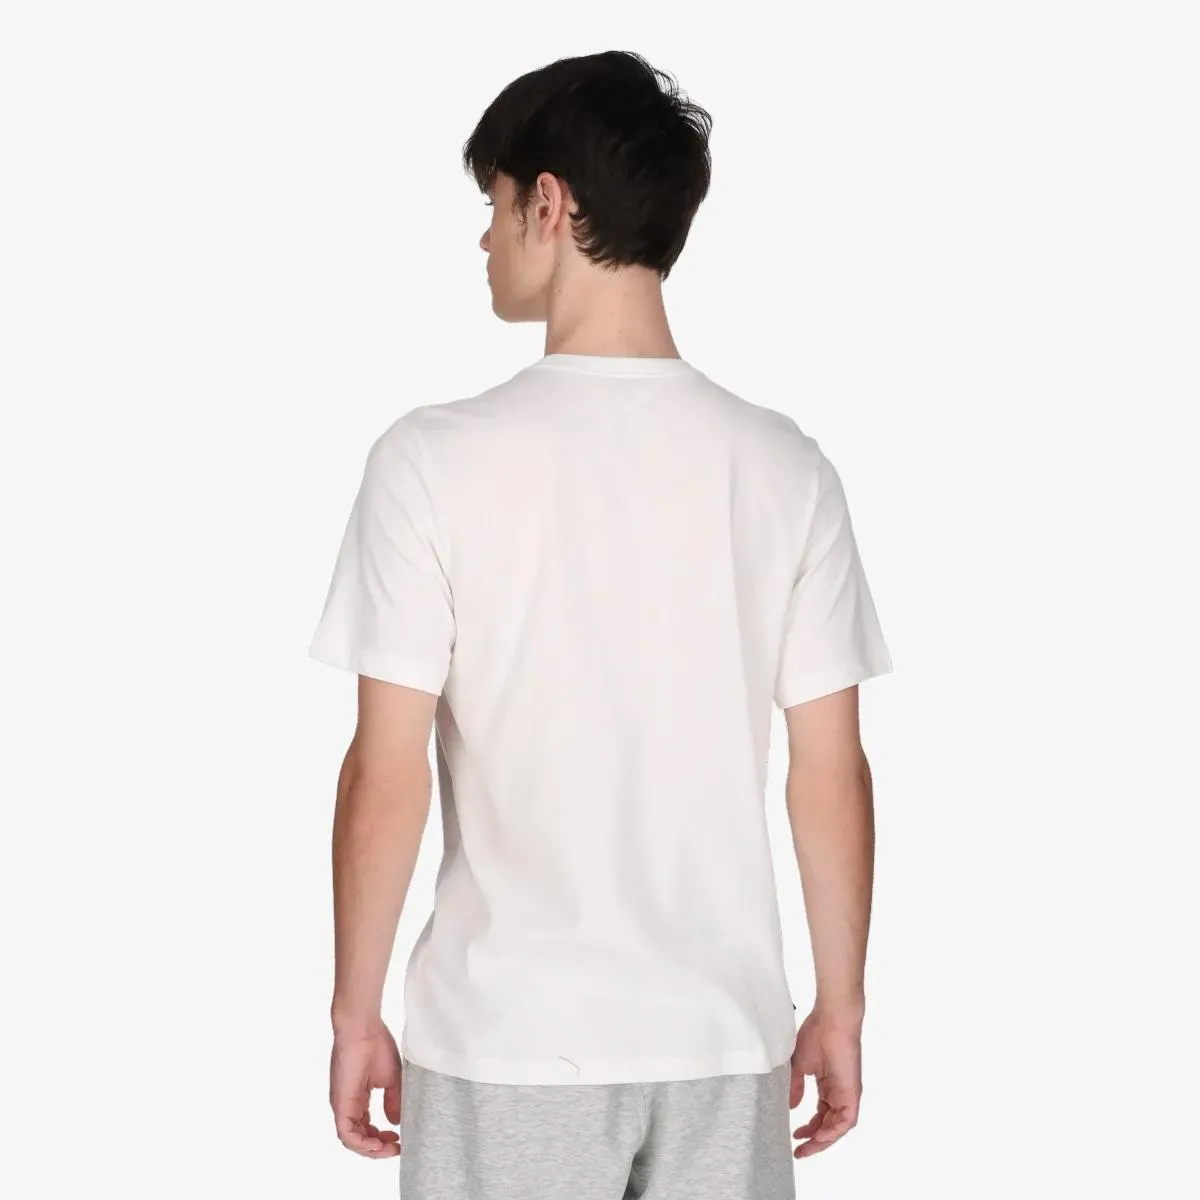 Nike T-shirt Kevin Durant 